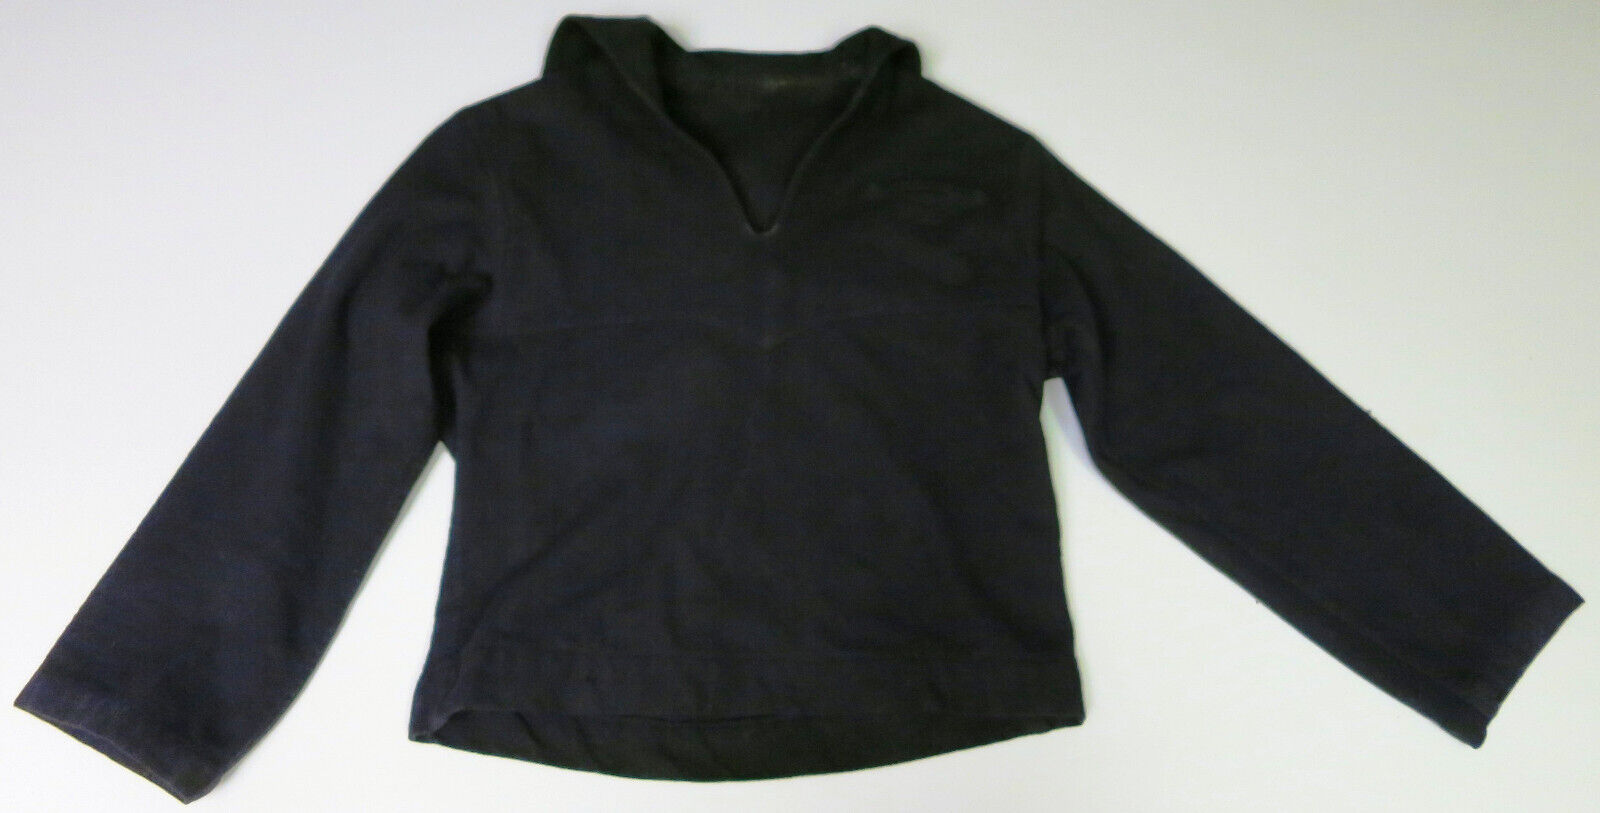 U.S. Navy WWI Enlisted Blue Wool Undress Jumper Uniform Top Shirt Cracker Jack